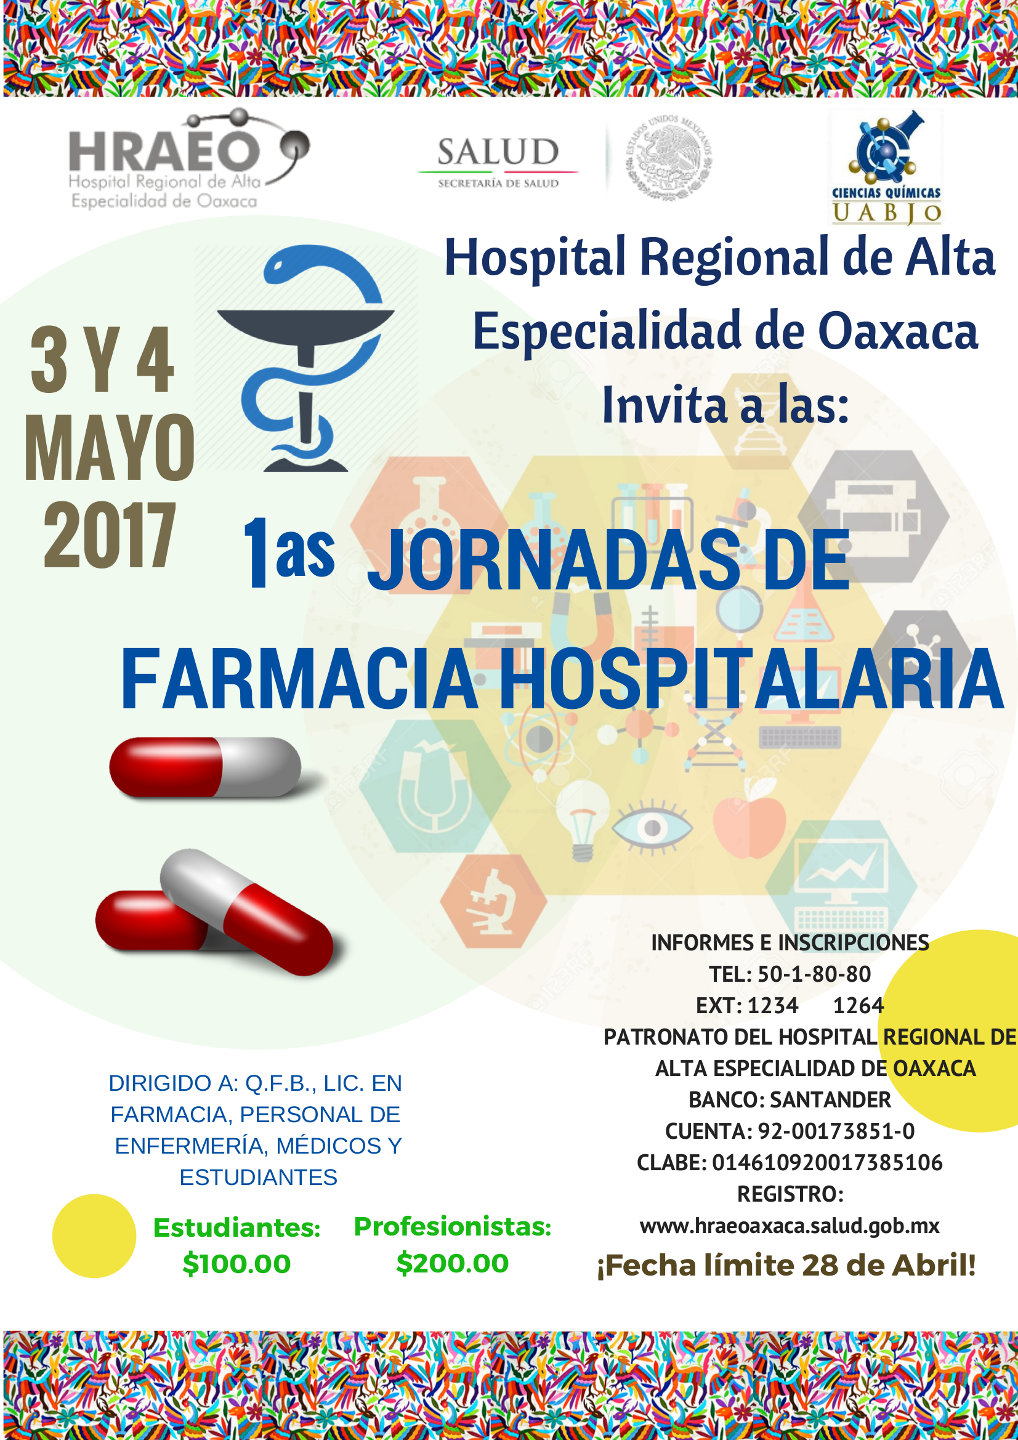 /cms/uploads/image/file/268852/cartel_jornadas_de_farmacia_hospitalaria_hraeo.jpg